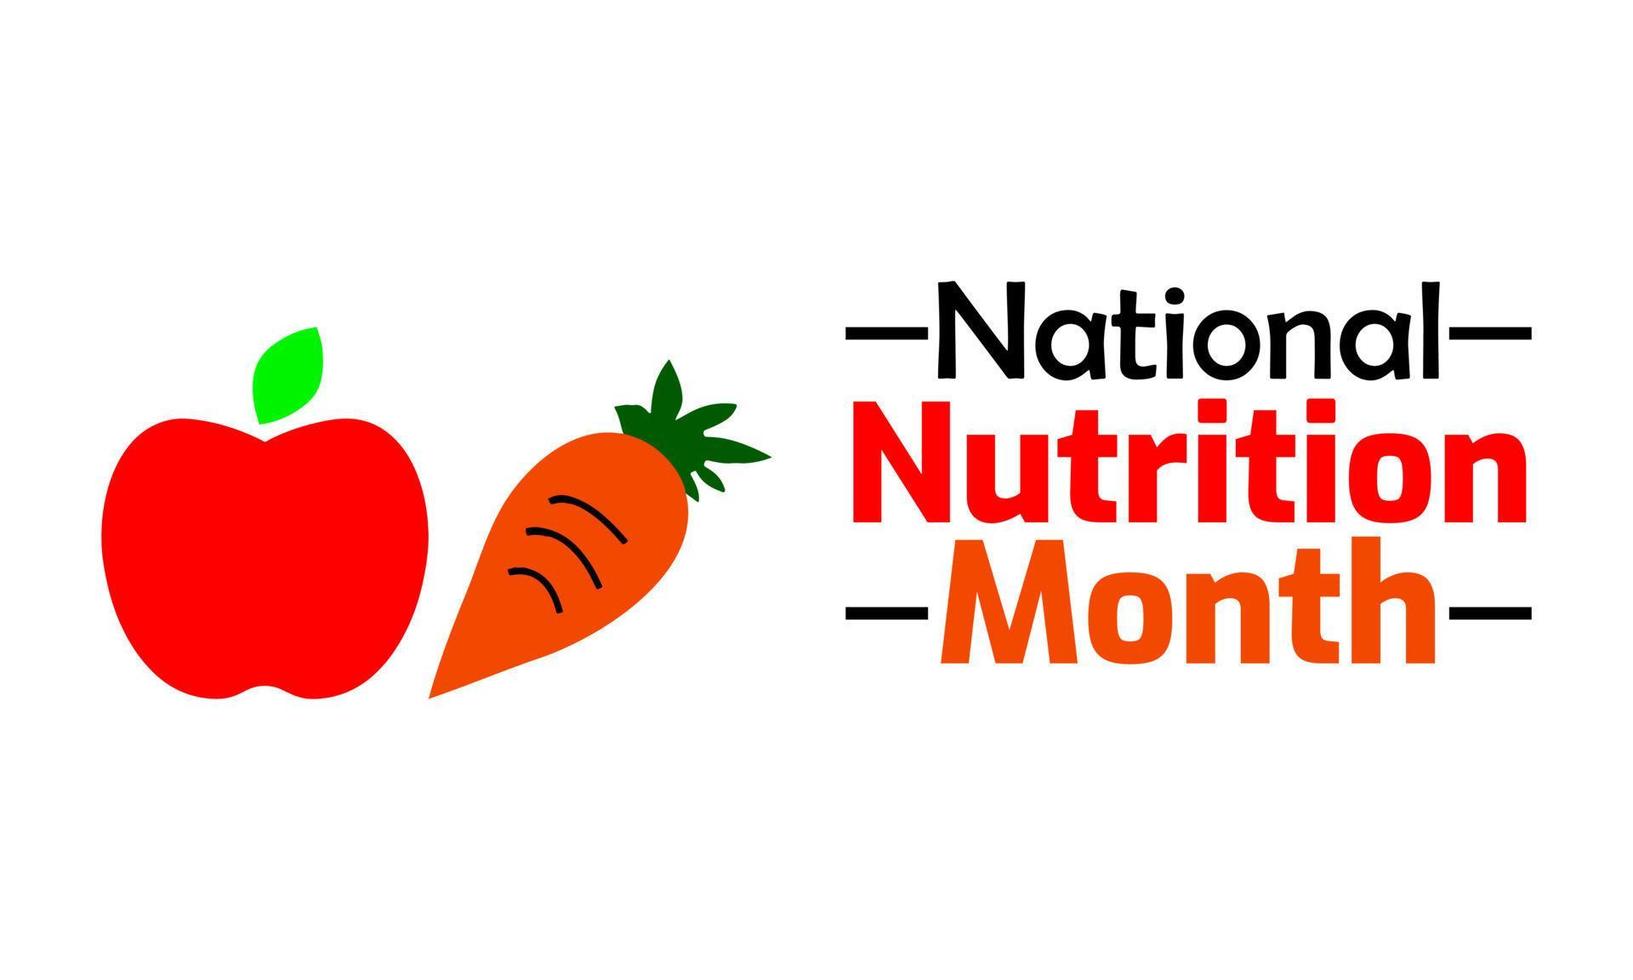 National Ernährung Monat Vektor illustration.national Ernährung Monat Banner Poster Hintergrund